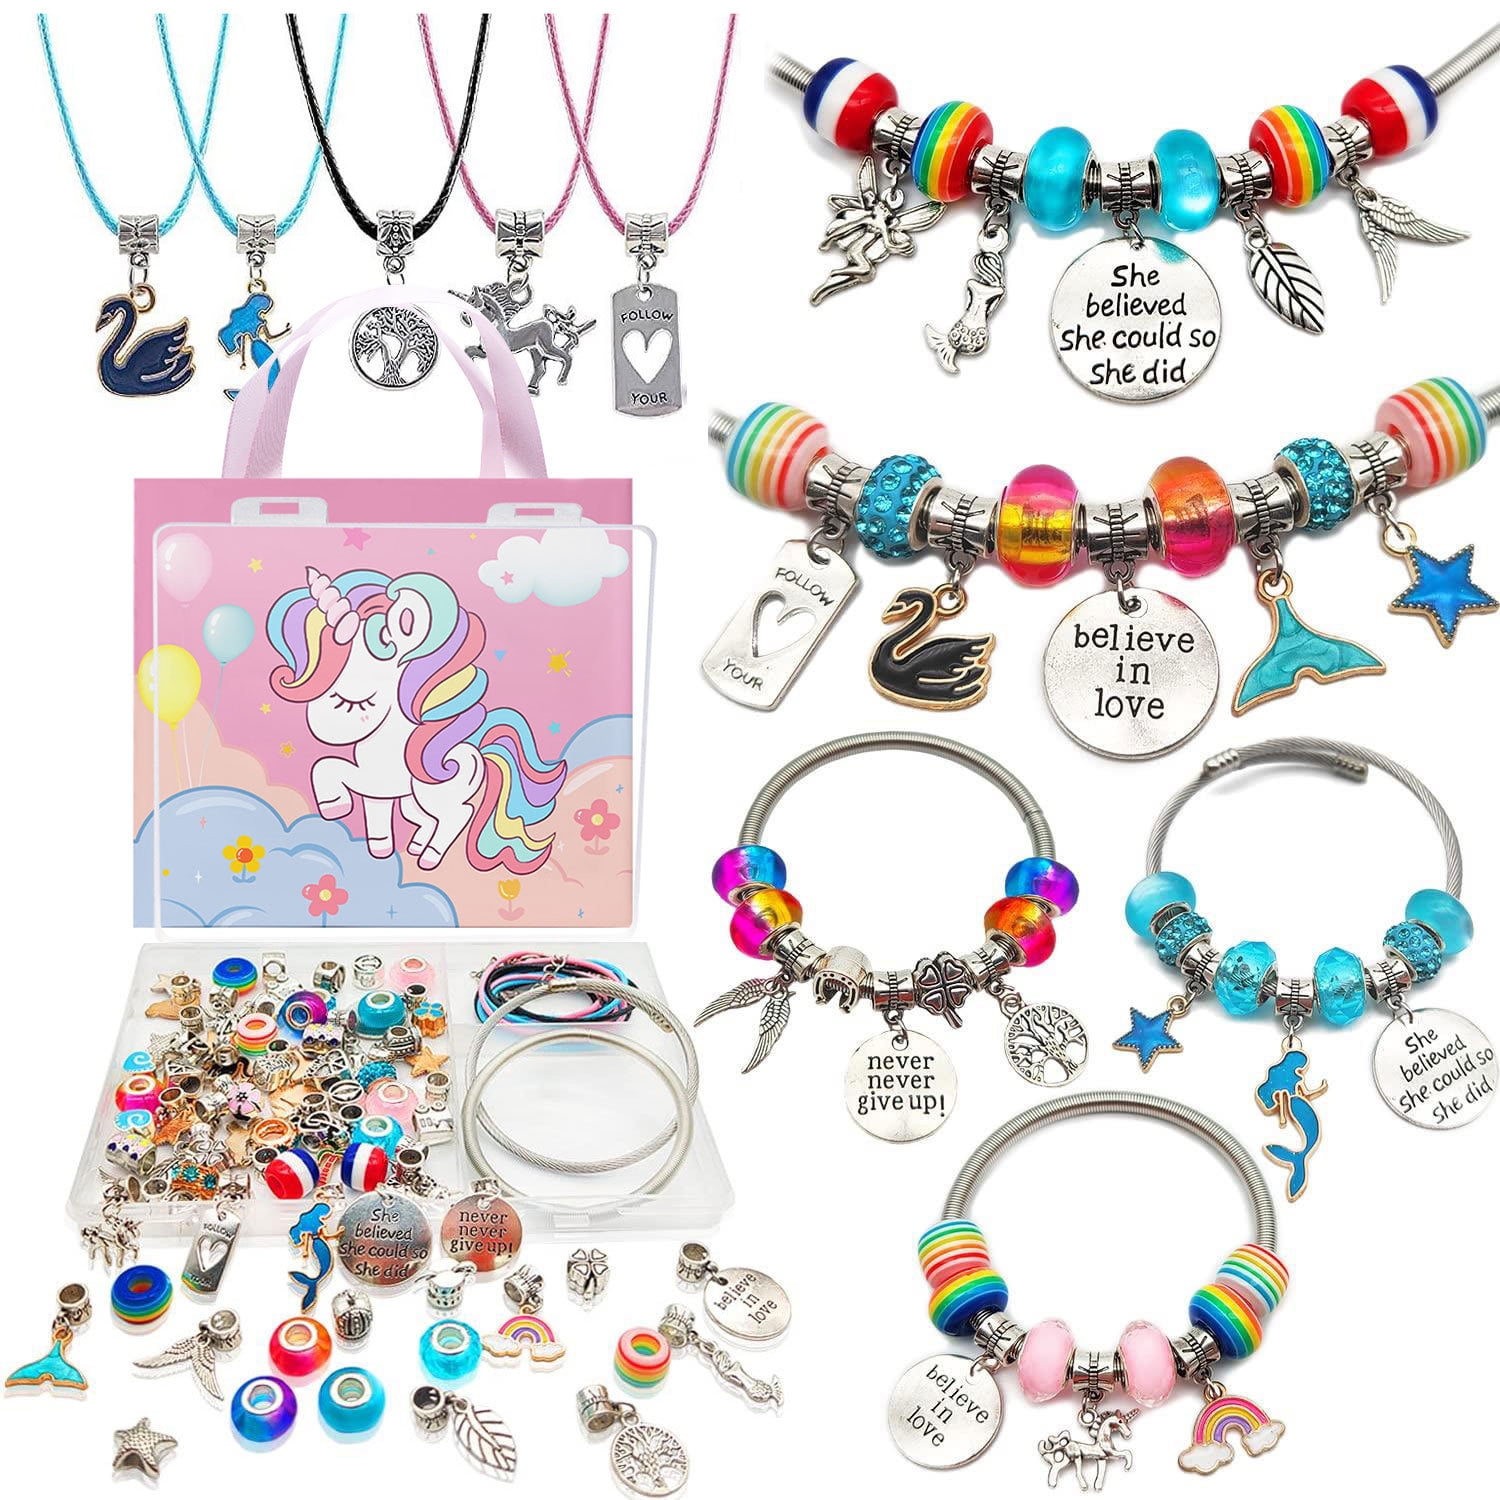 DraggmePartty Unicorn Girl Gift Jewelry Making Kit - Kids Toys Art Crafts  Ages 6 7 8 9 10+ Charm Bracelet Making Supplies Beading